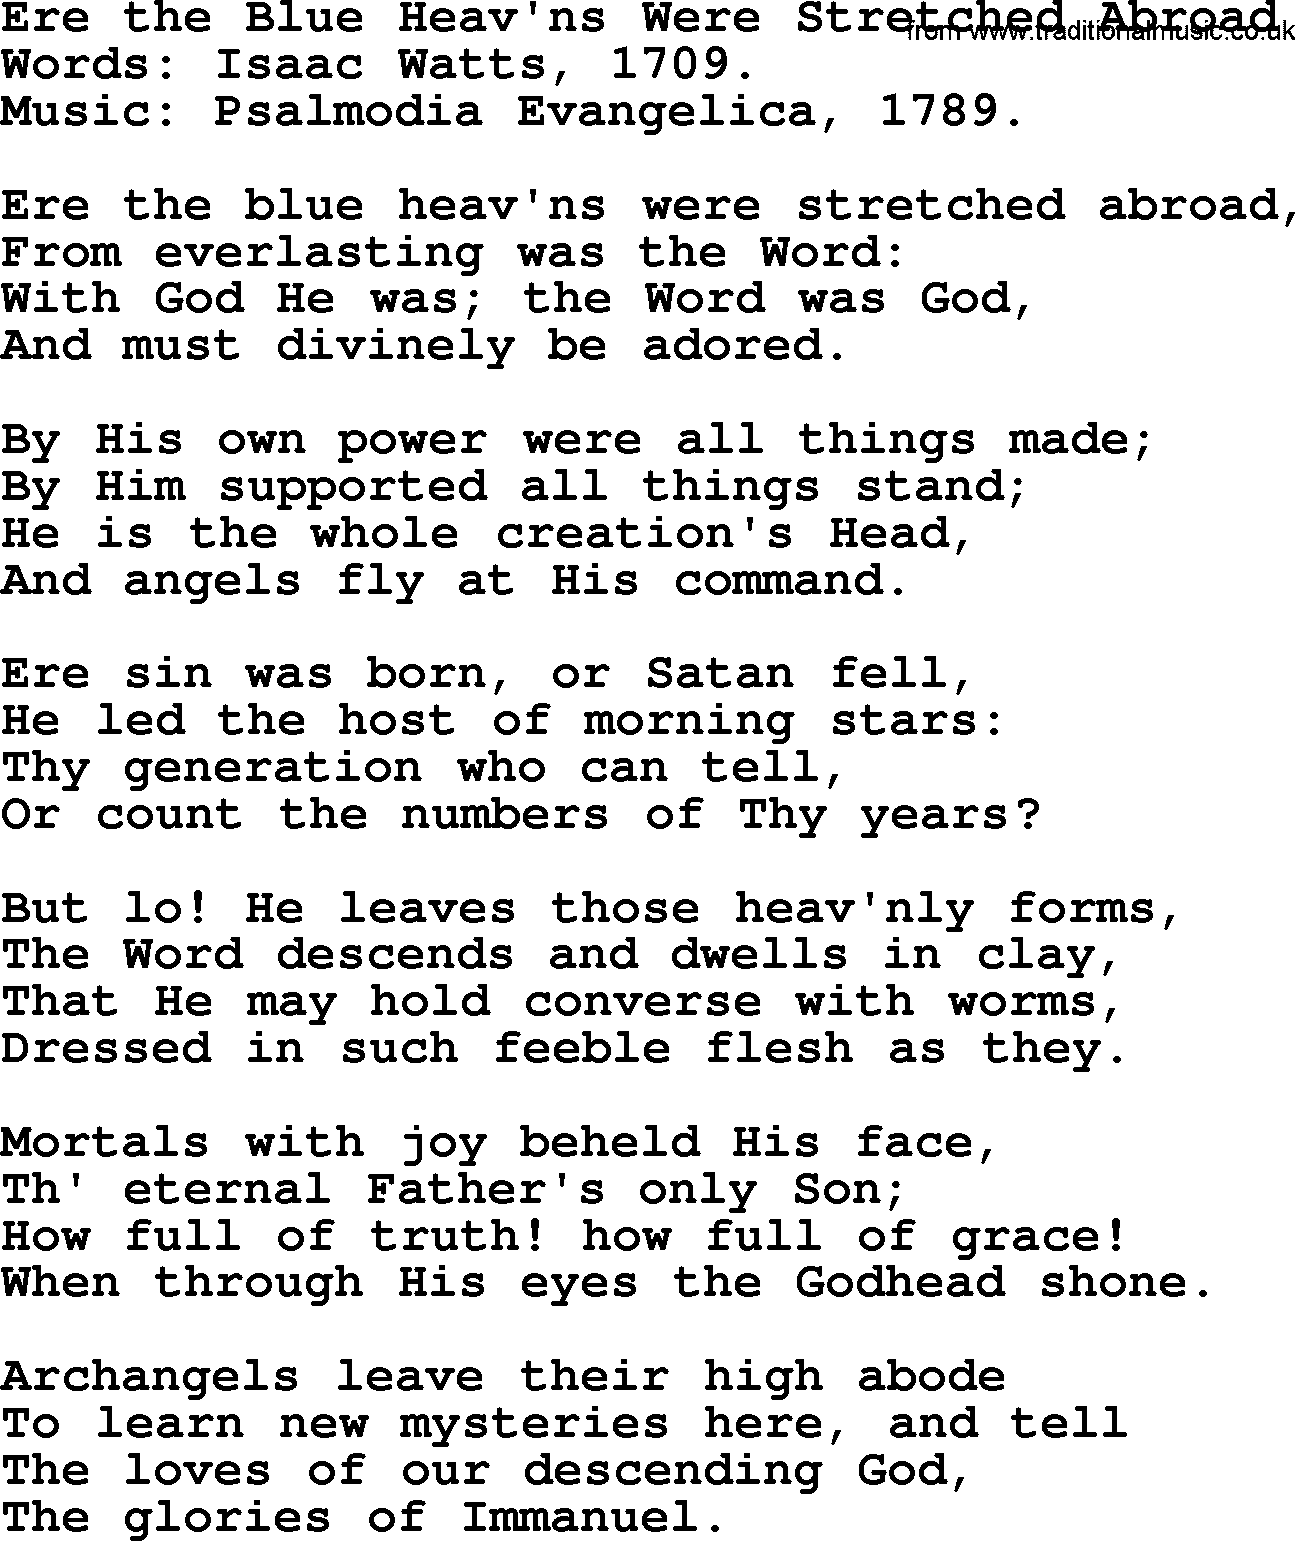 Isaac Watts Christian hymn: Ere the Blue Heav'ns Were Stretched Abroad- lyricss